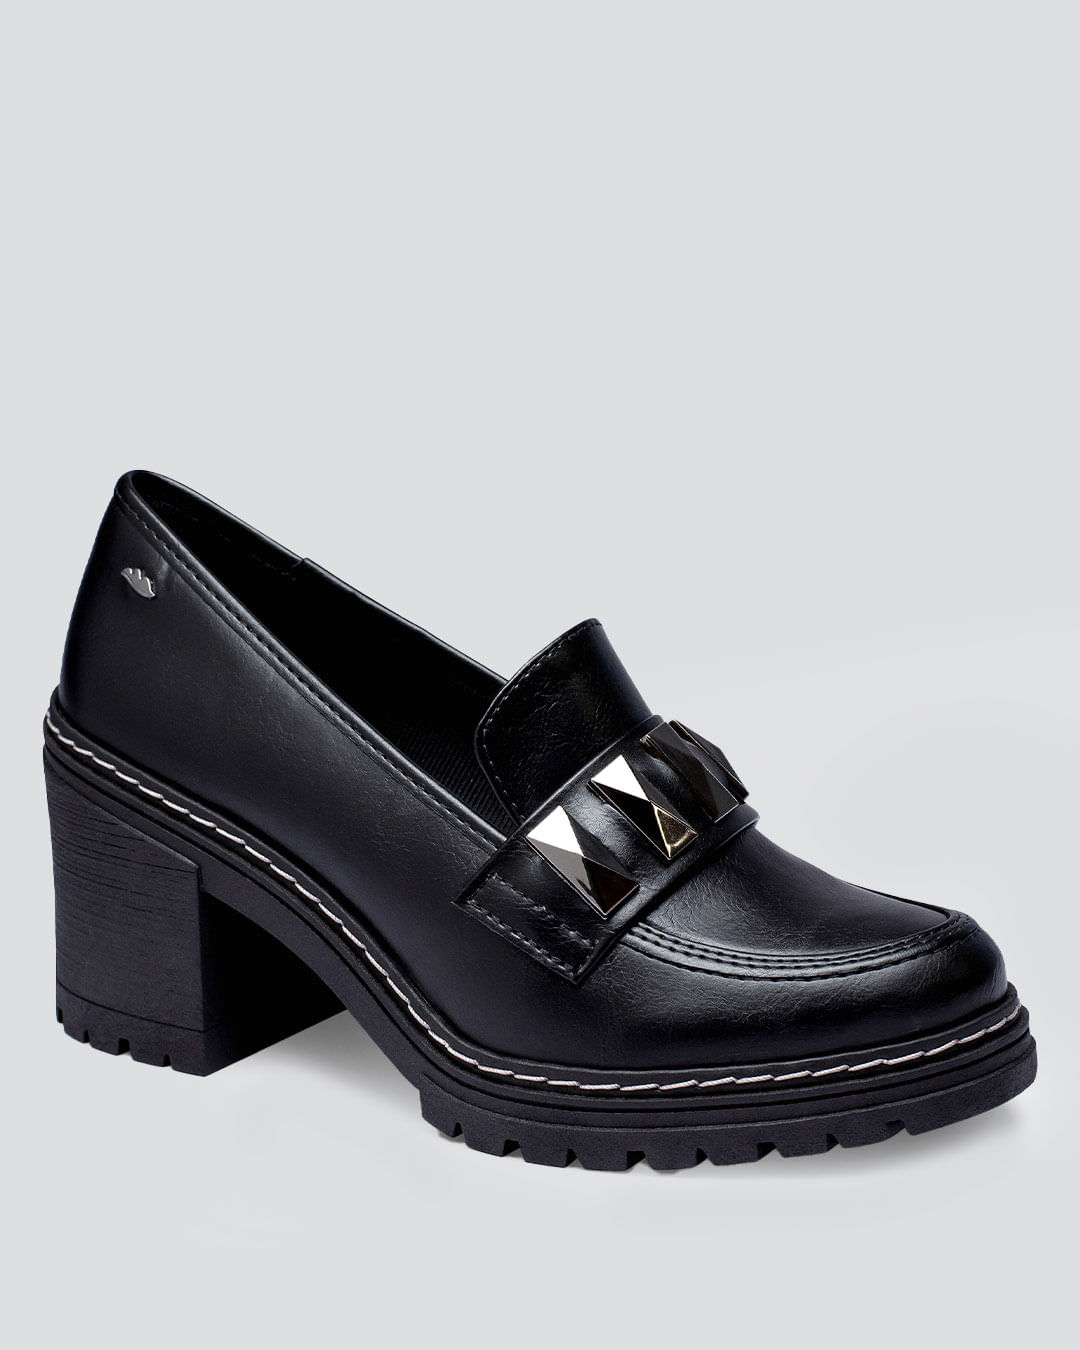 Sapato Feminino Dakota Loafer Salto Bloco Preto